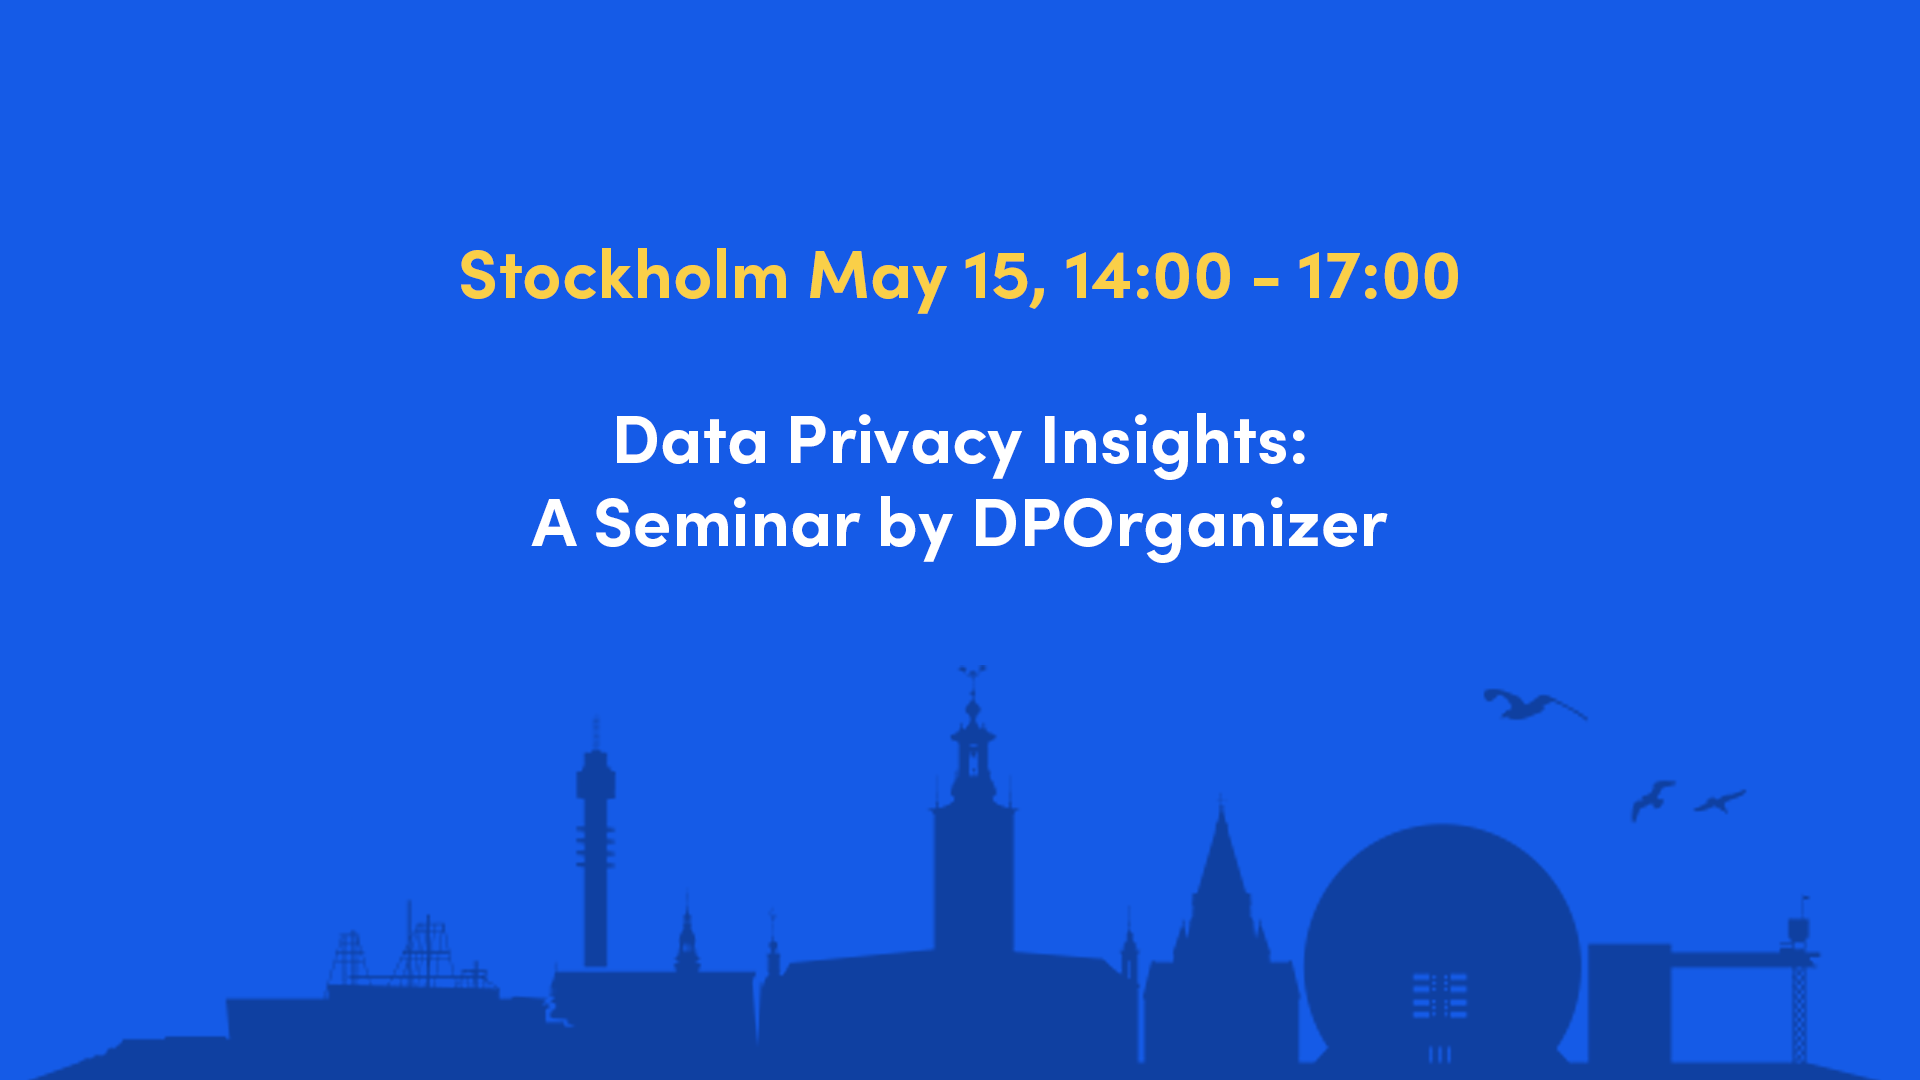 Data Privacy Insights: A Seminar by DPOrganizer